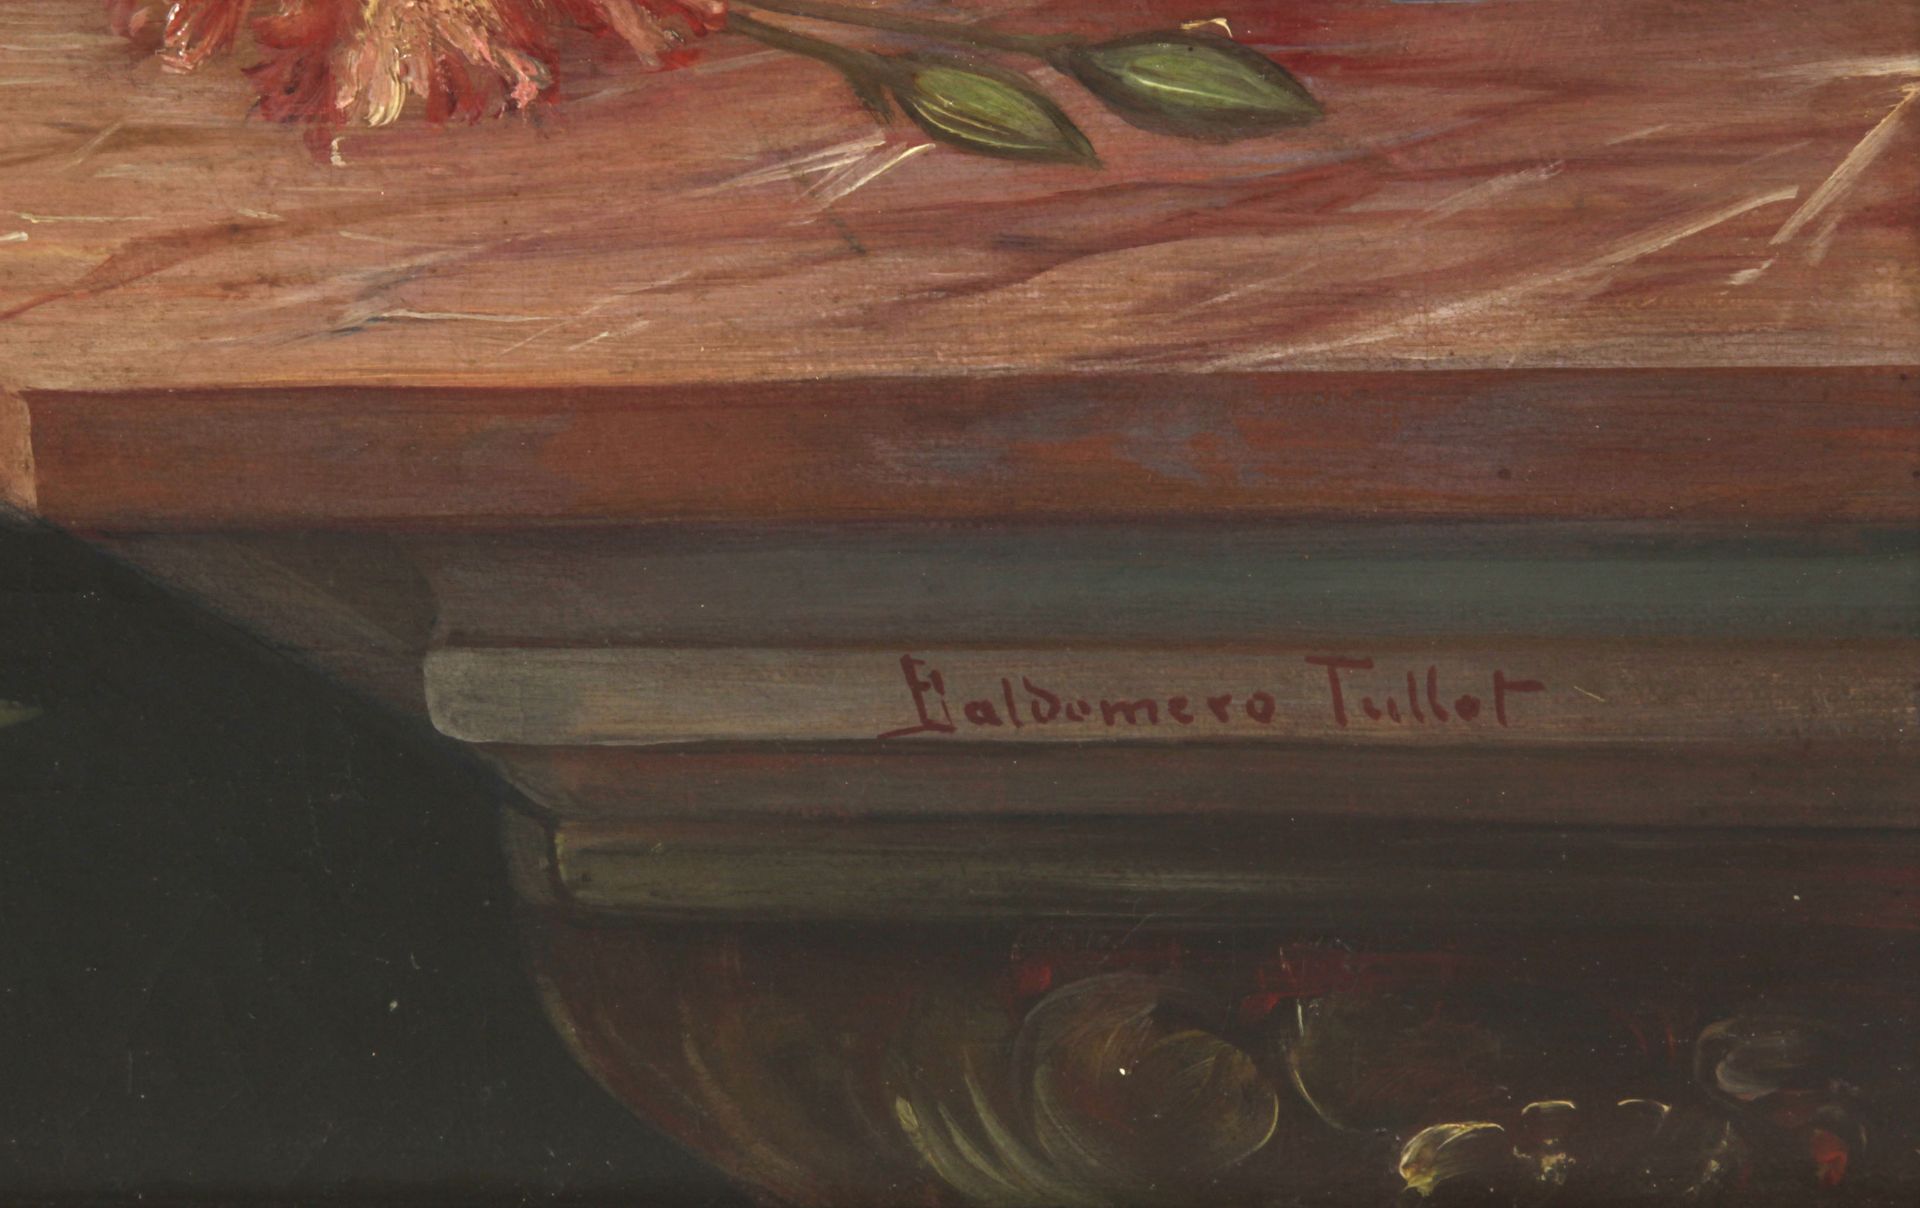 Baldomero Taller - Bild 3 aus 4